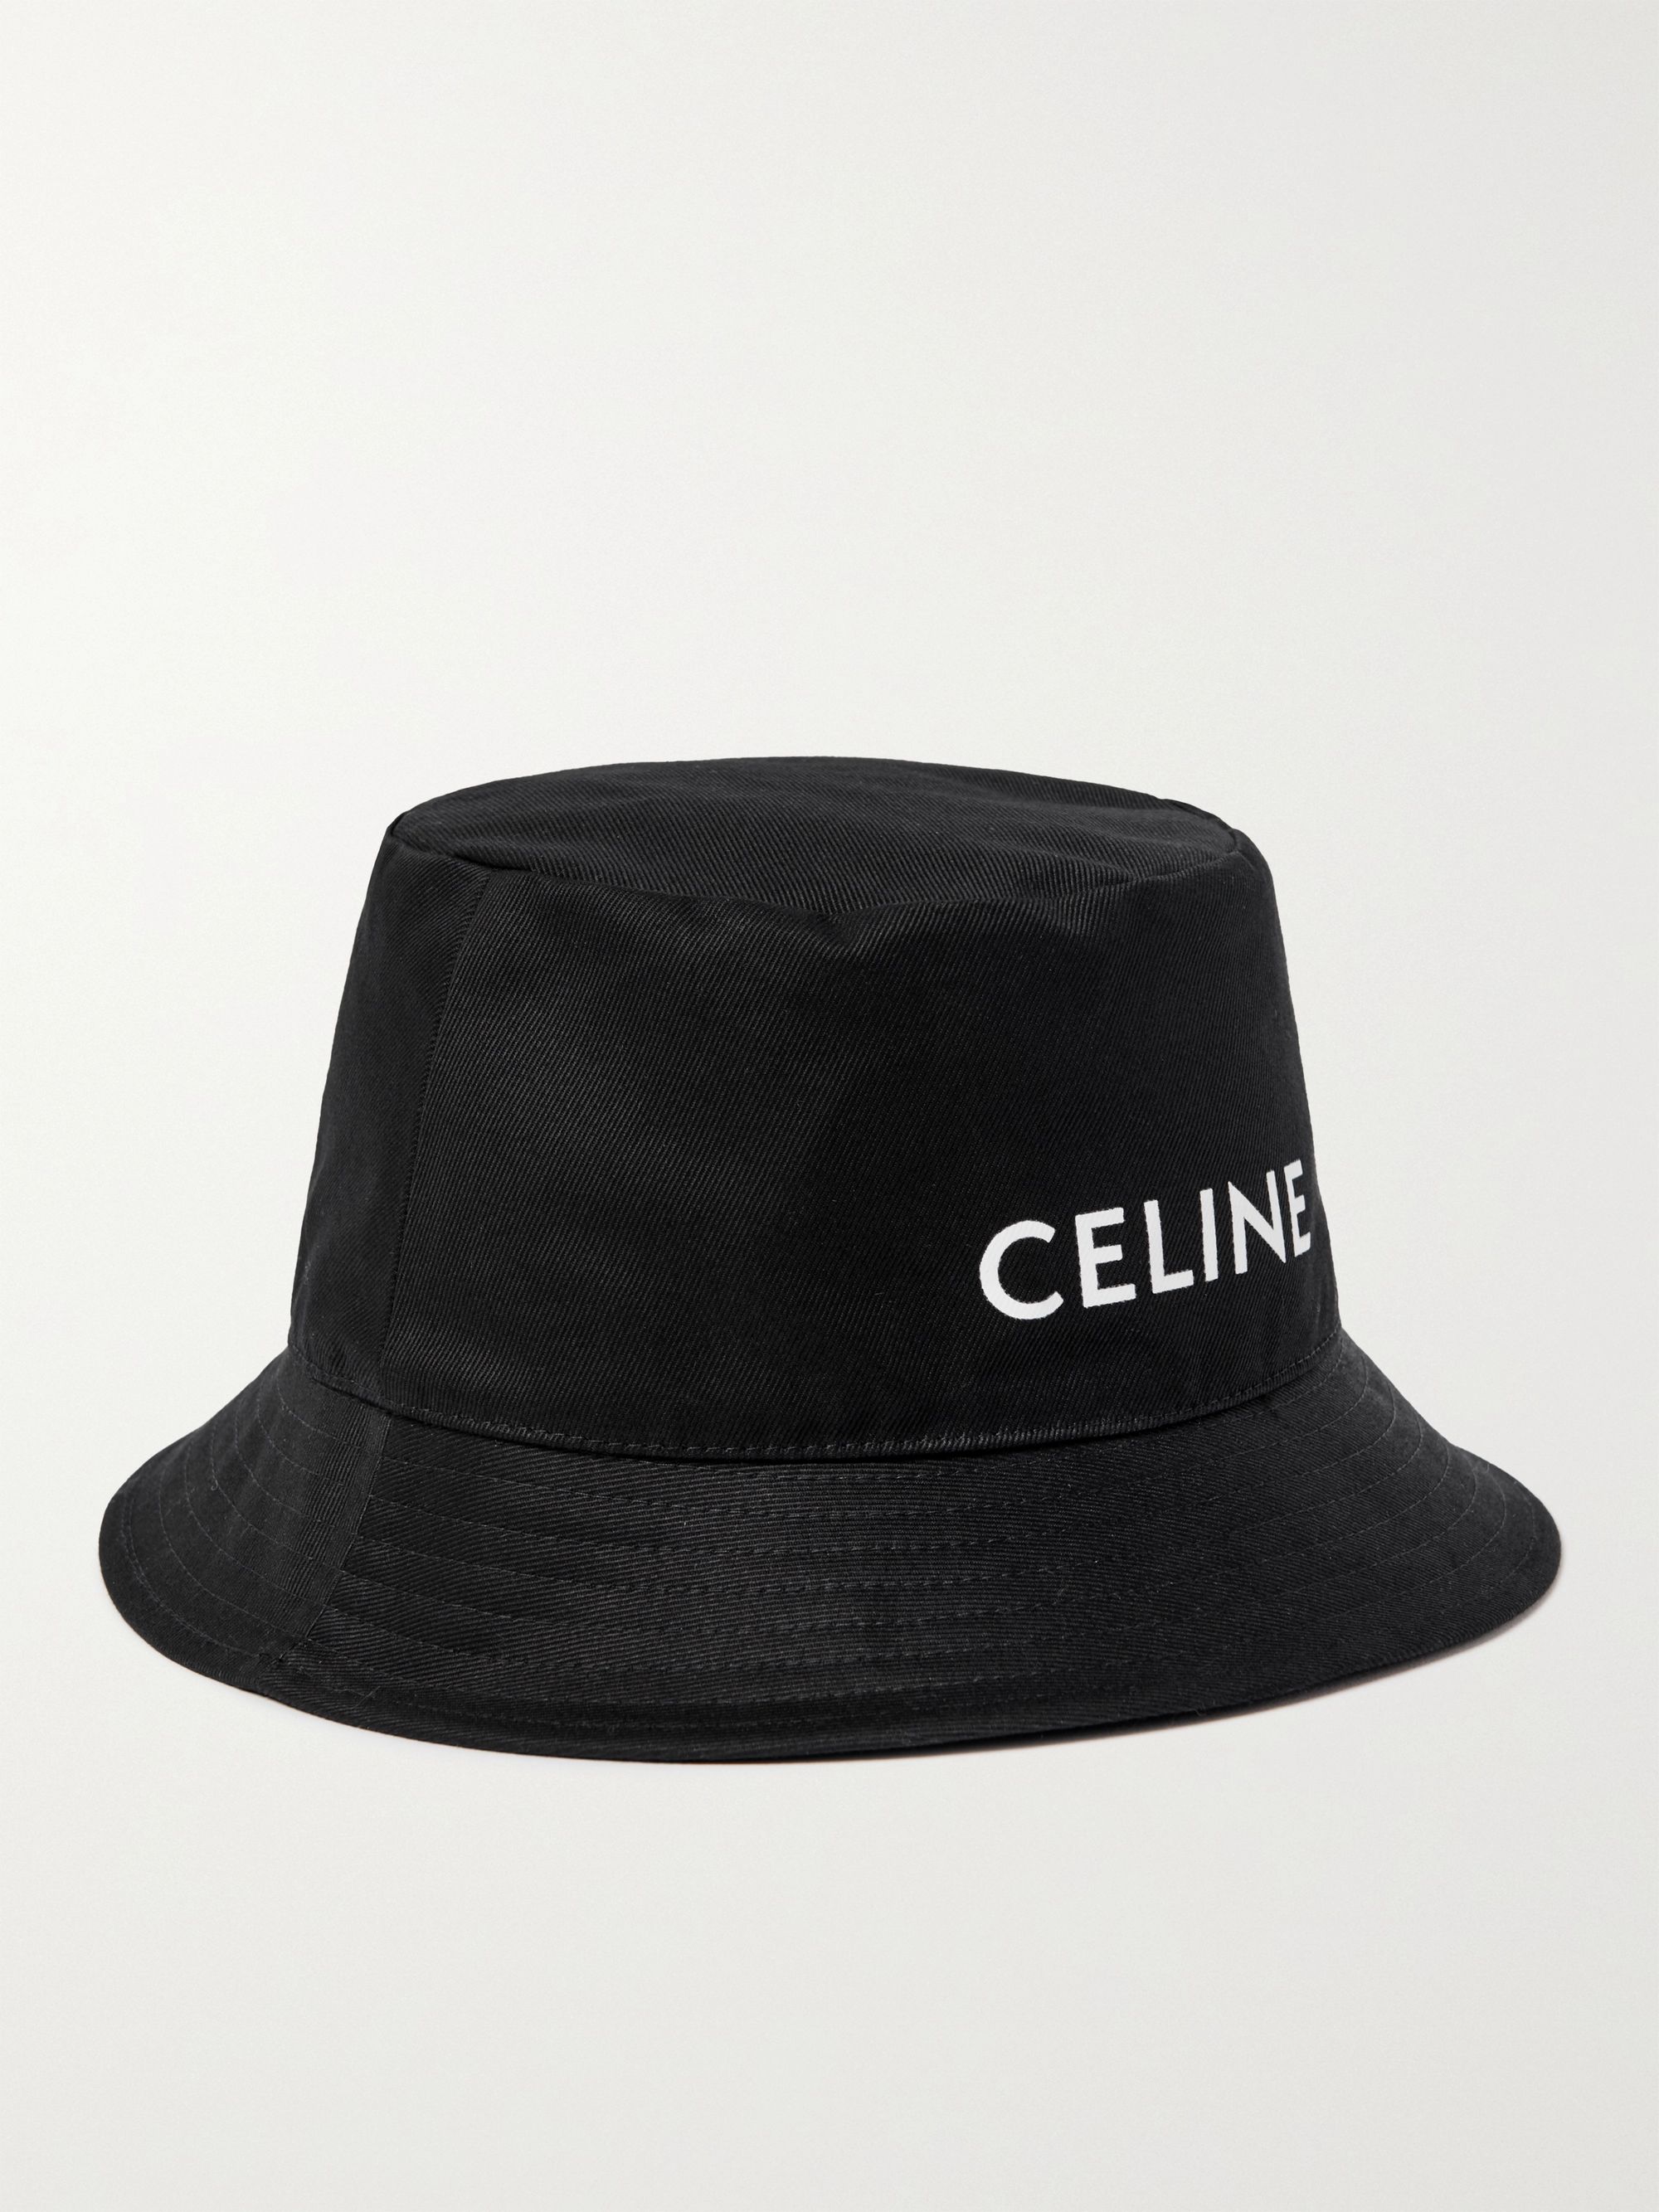 Celine Hats Store, 53% OFF | www.ingeniovirtual.com